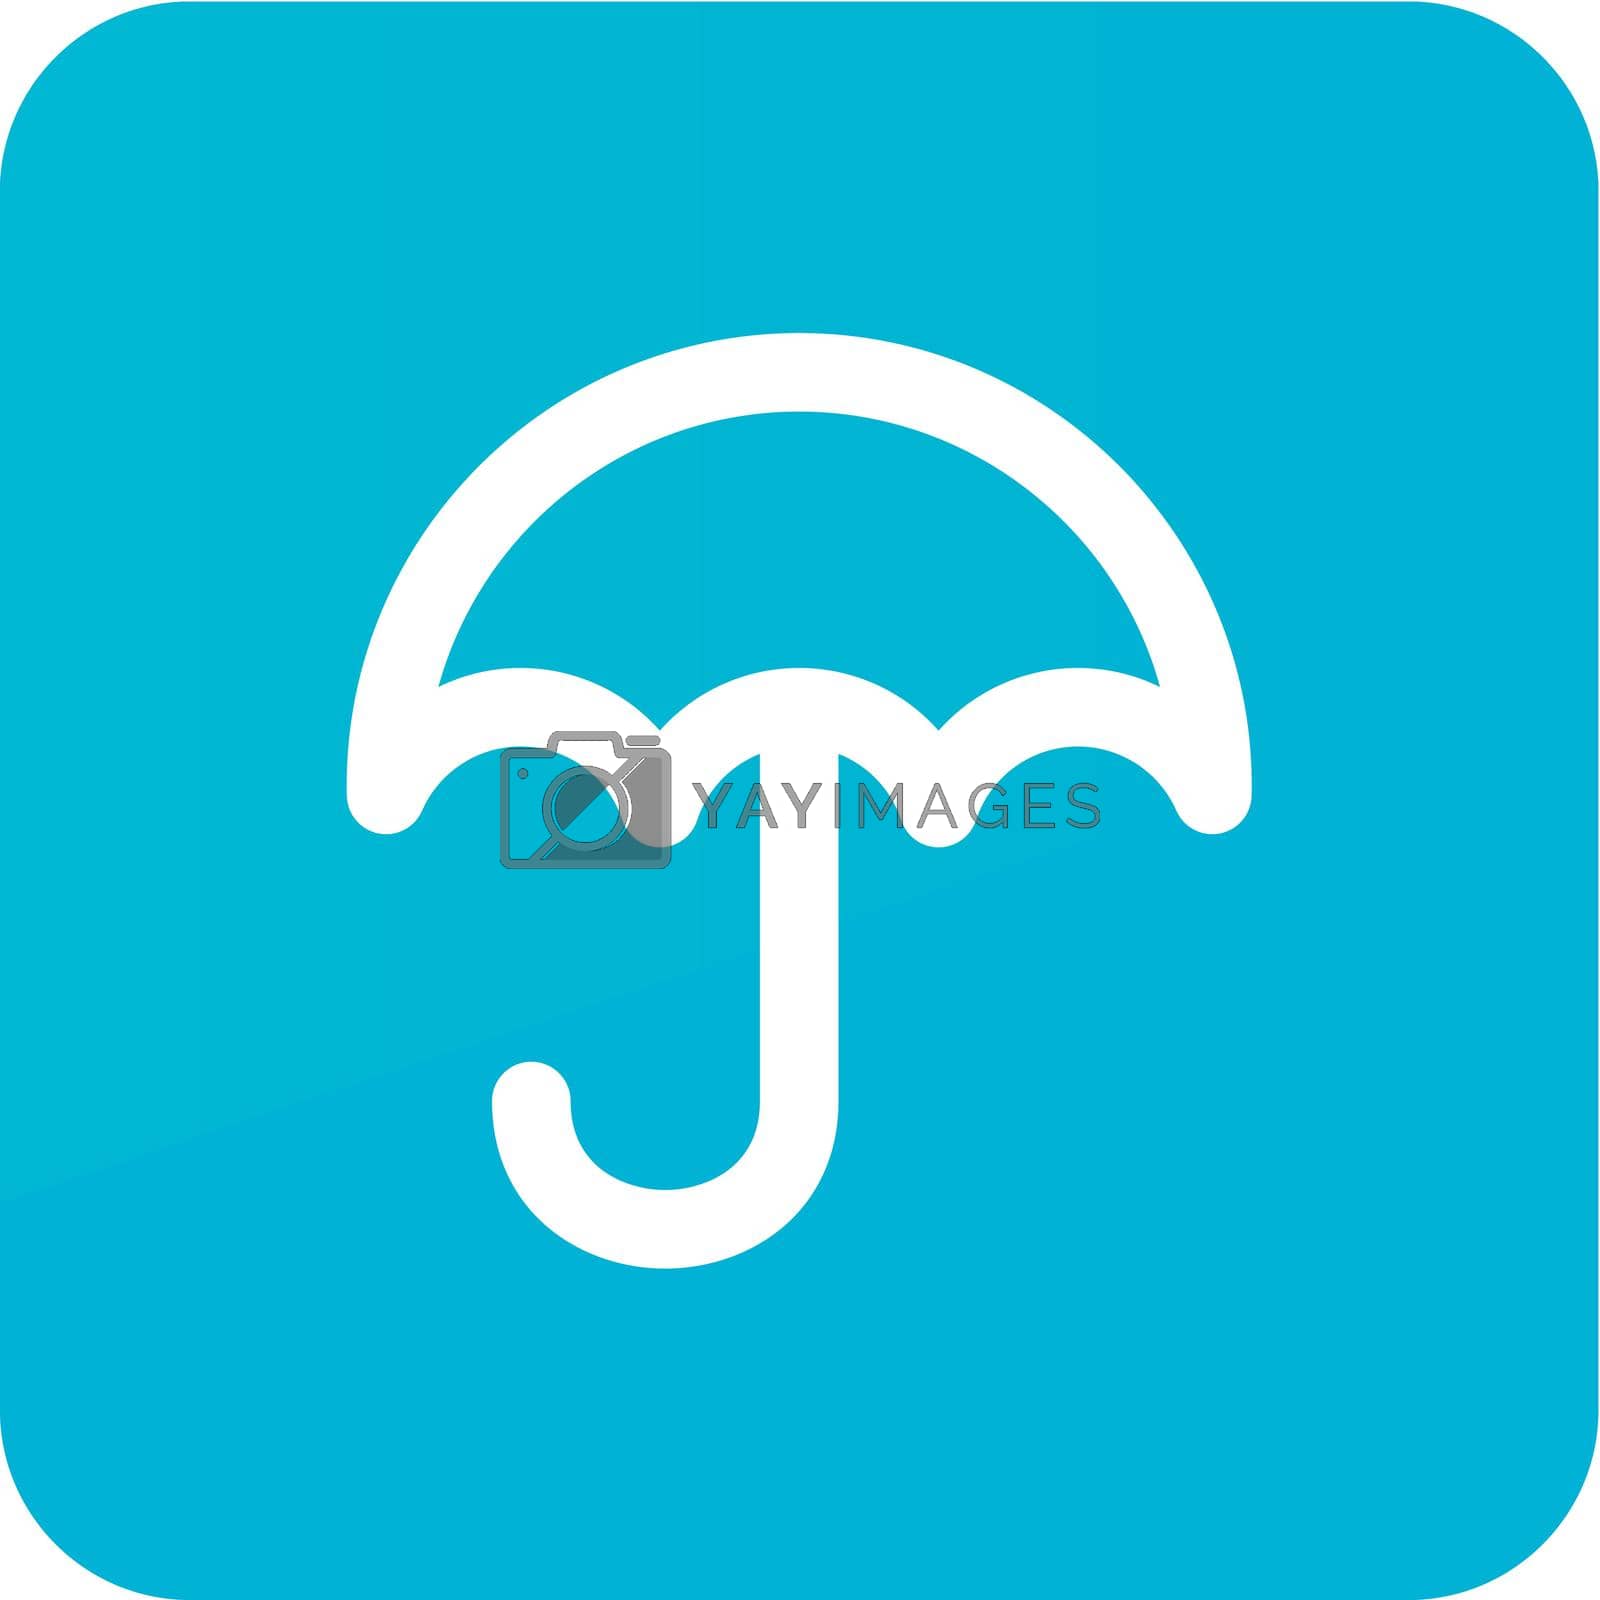 Umbrella Rain outline icon. Meteorology. Weather. Vector illustration eps 10